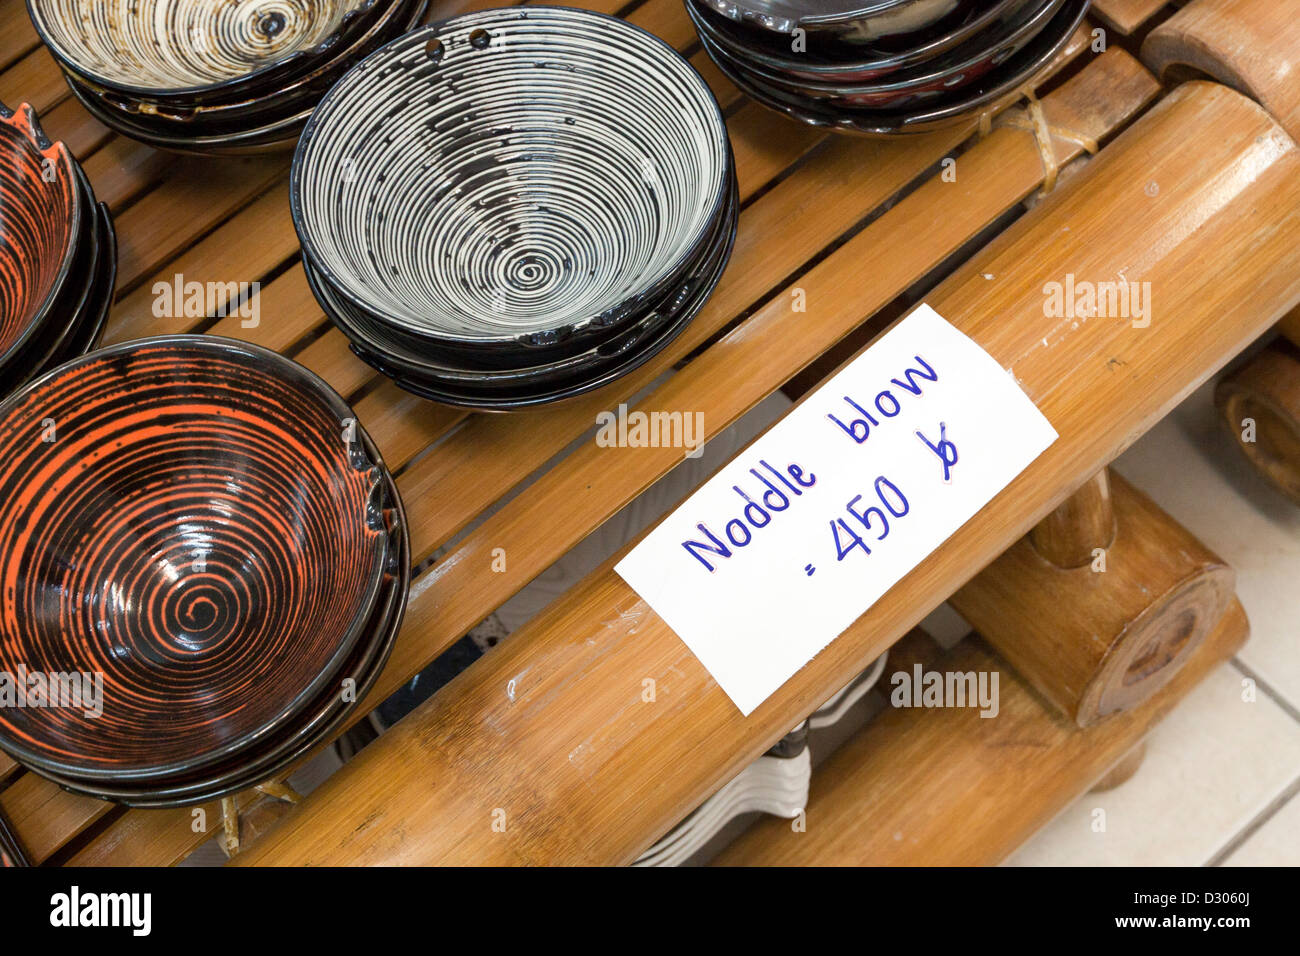 Noodle bowls for sale with sale tag misspelt (noddle blow) Stock Photo